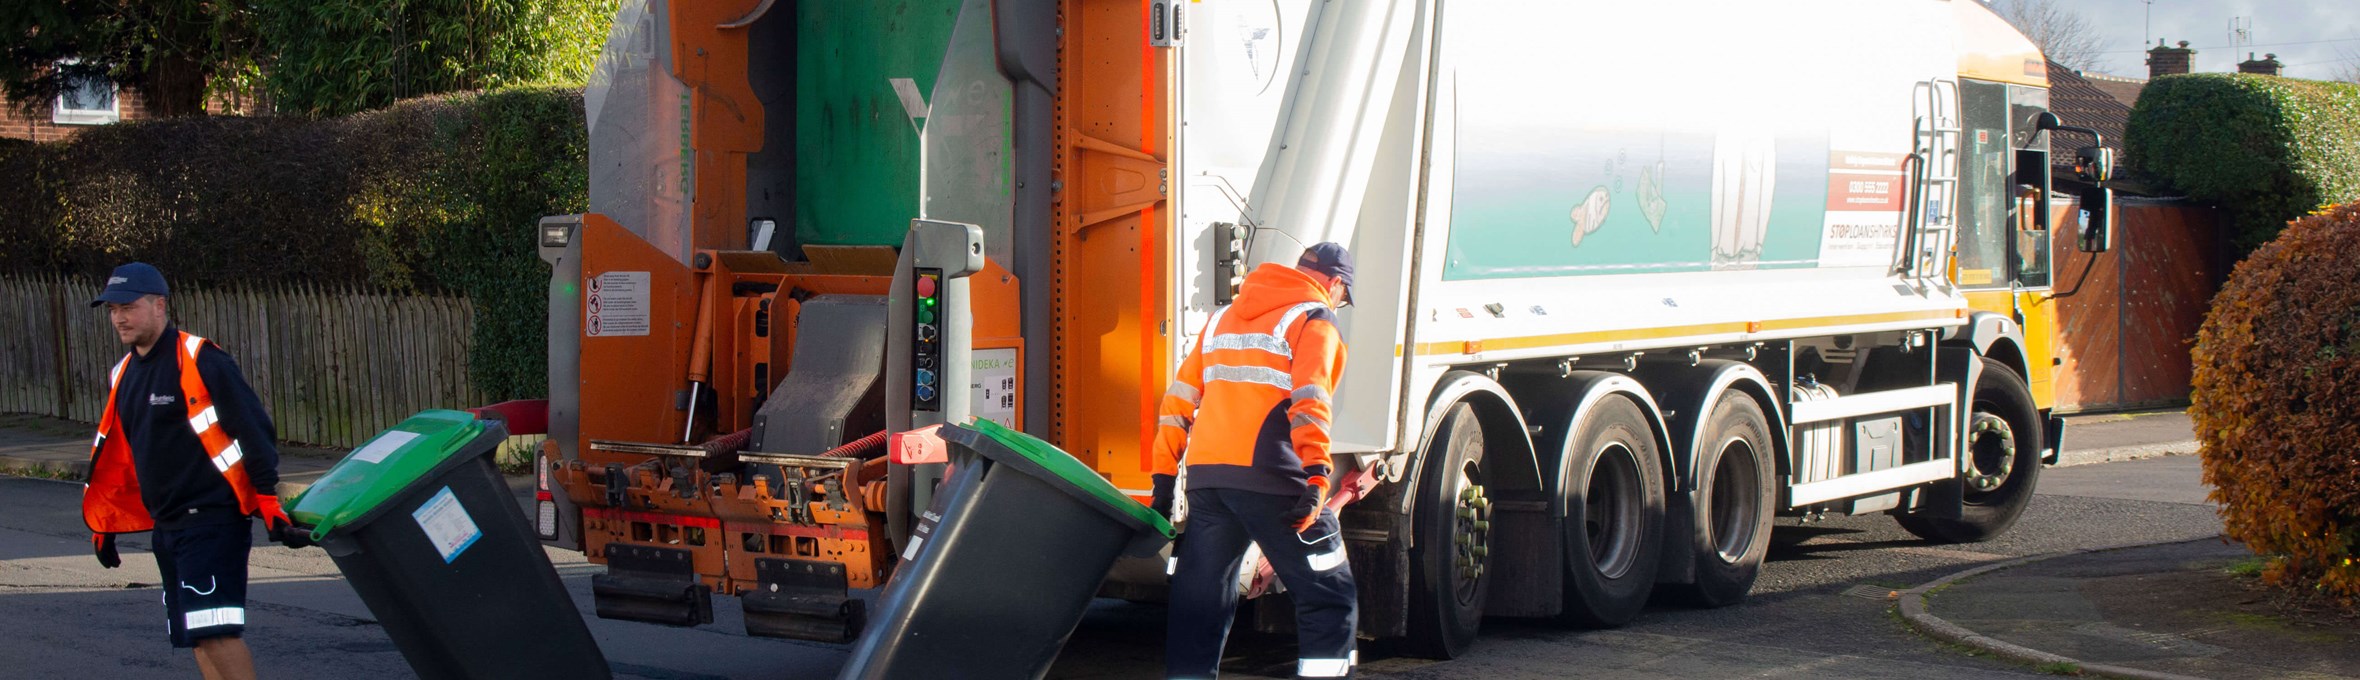 Waste team on their round, emptying bins into a bin lorry